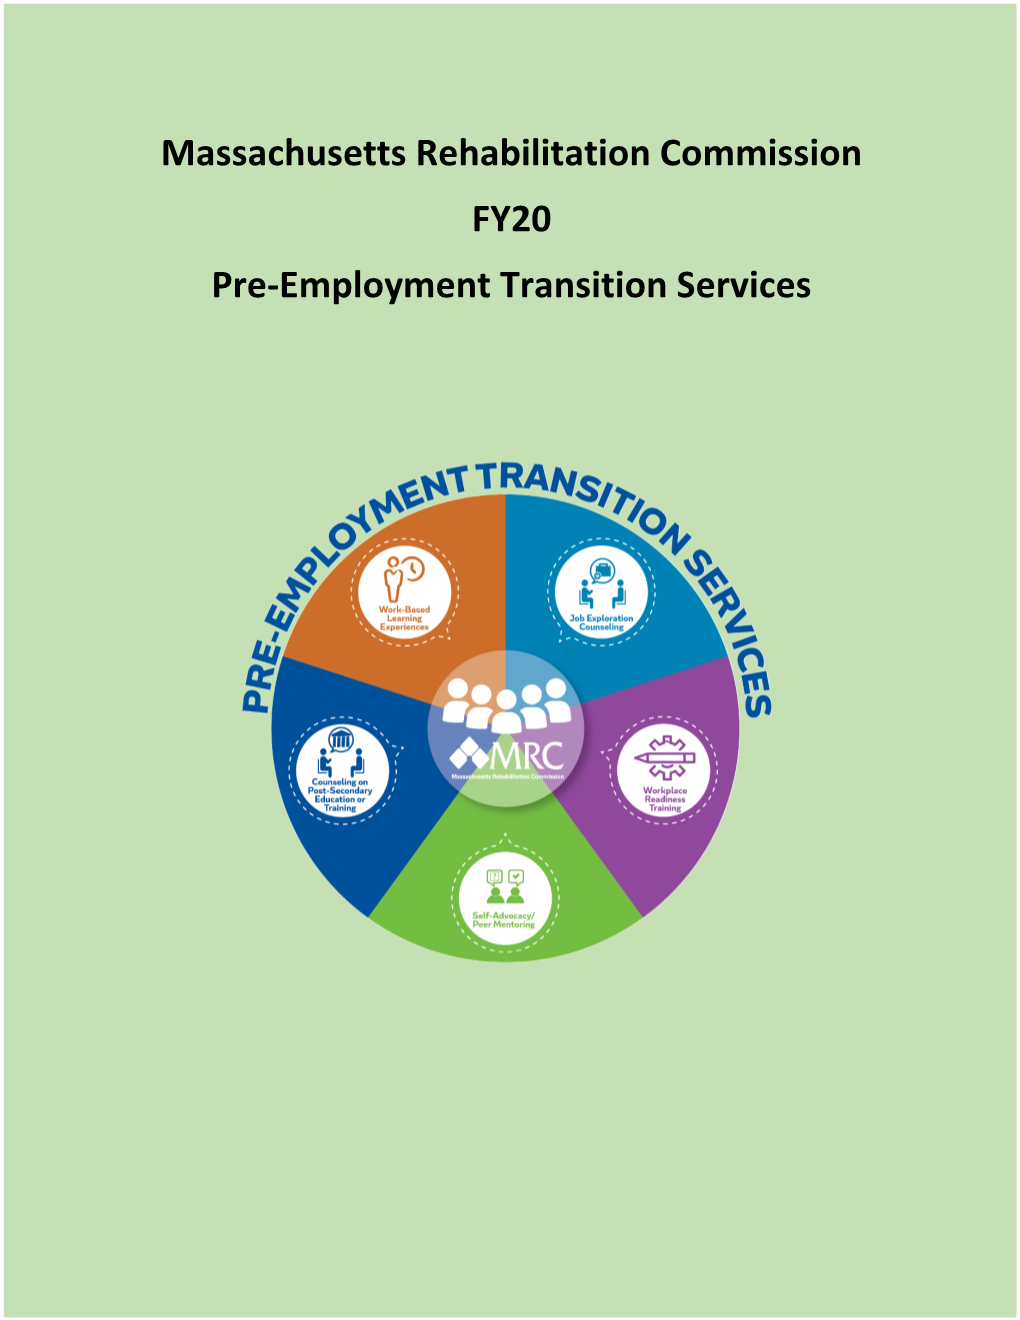 Massachusetts Rehabilitation Commission FY20 Pre-Employment Transition Services